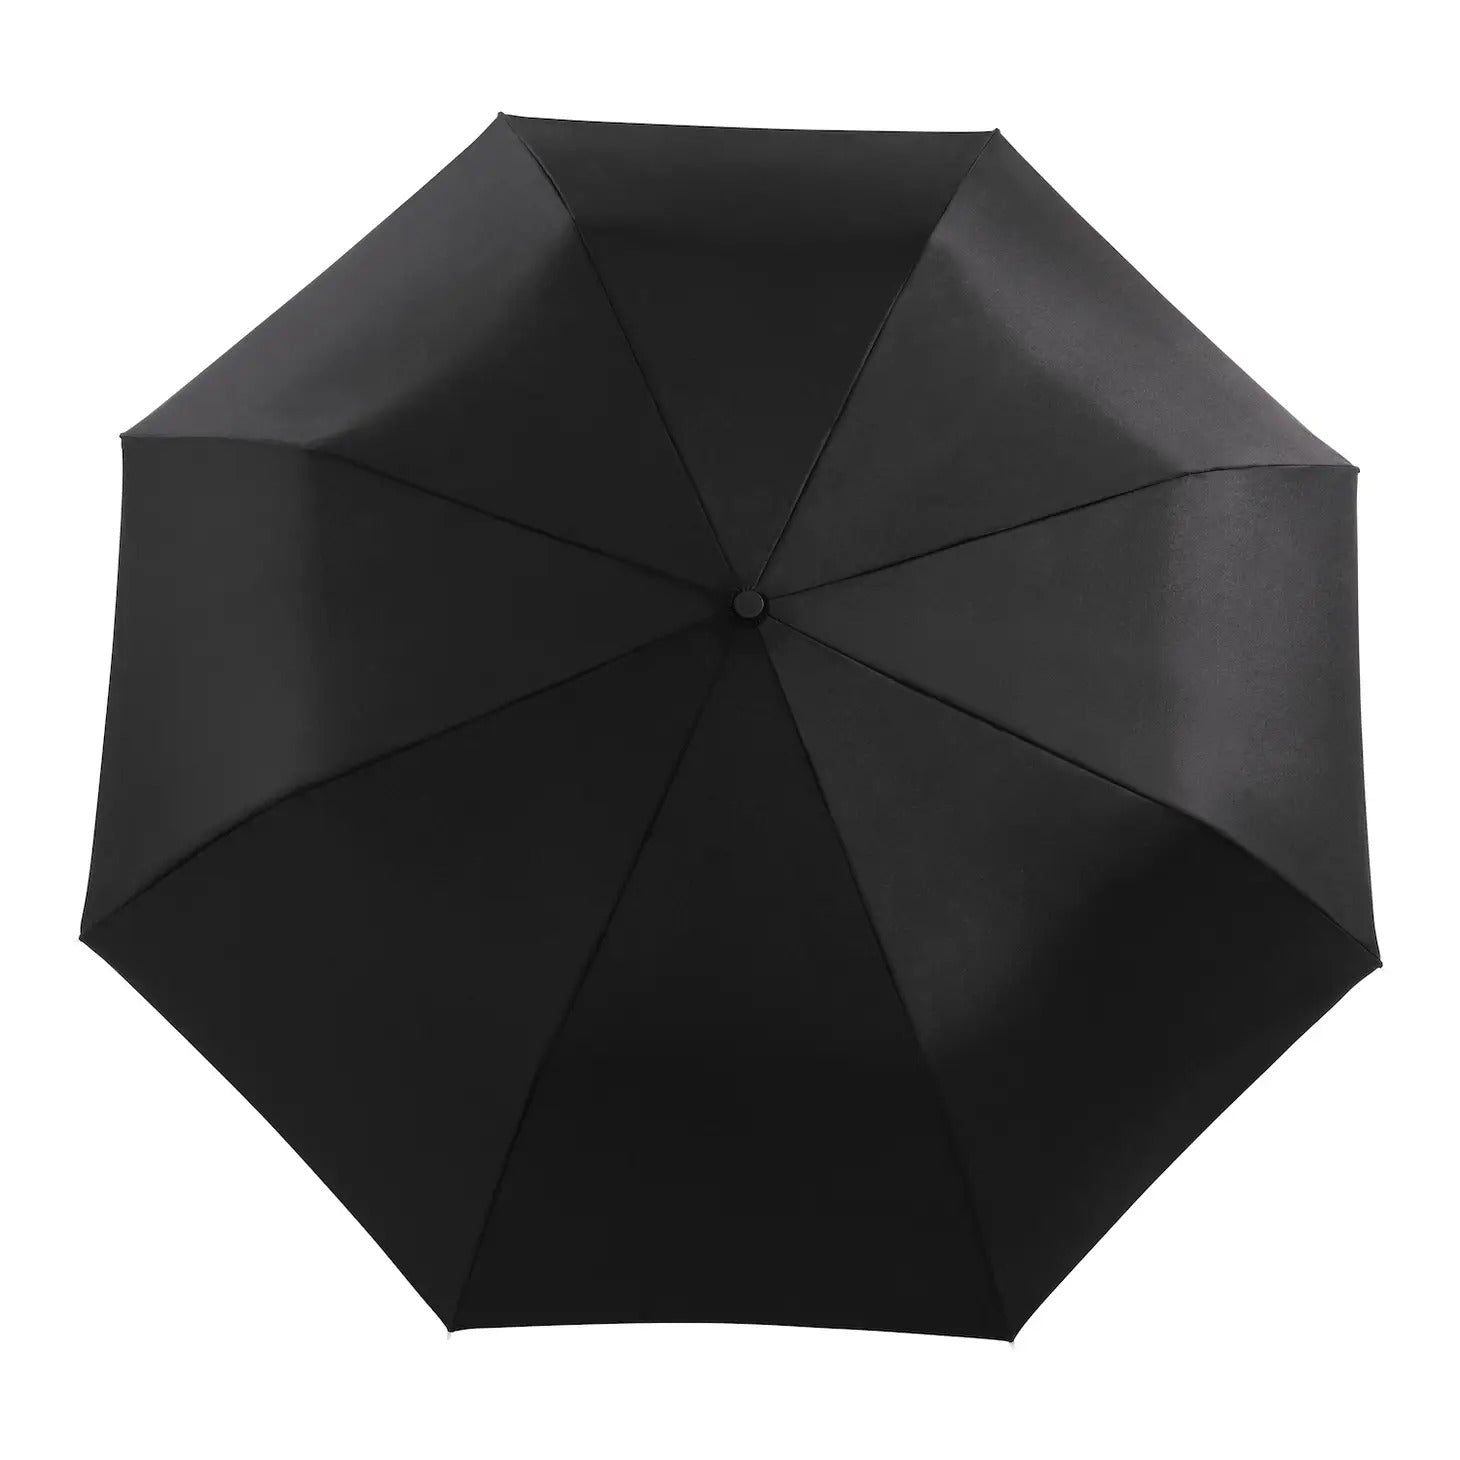 Black Compact Eco-Friendly Wind Resistant Umbrella by Original Duckhead